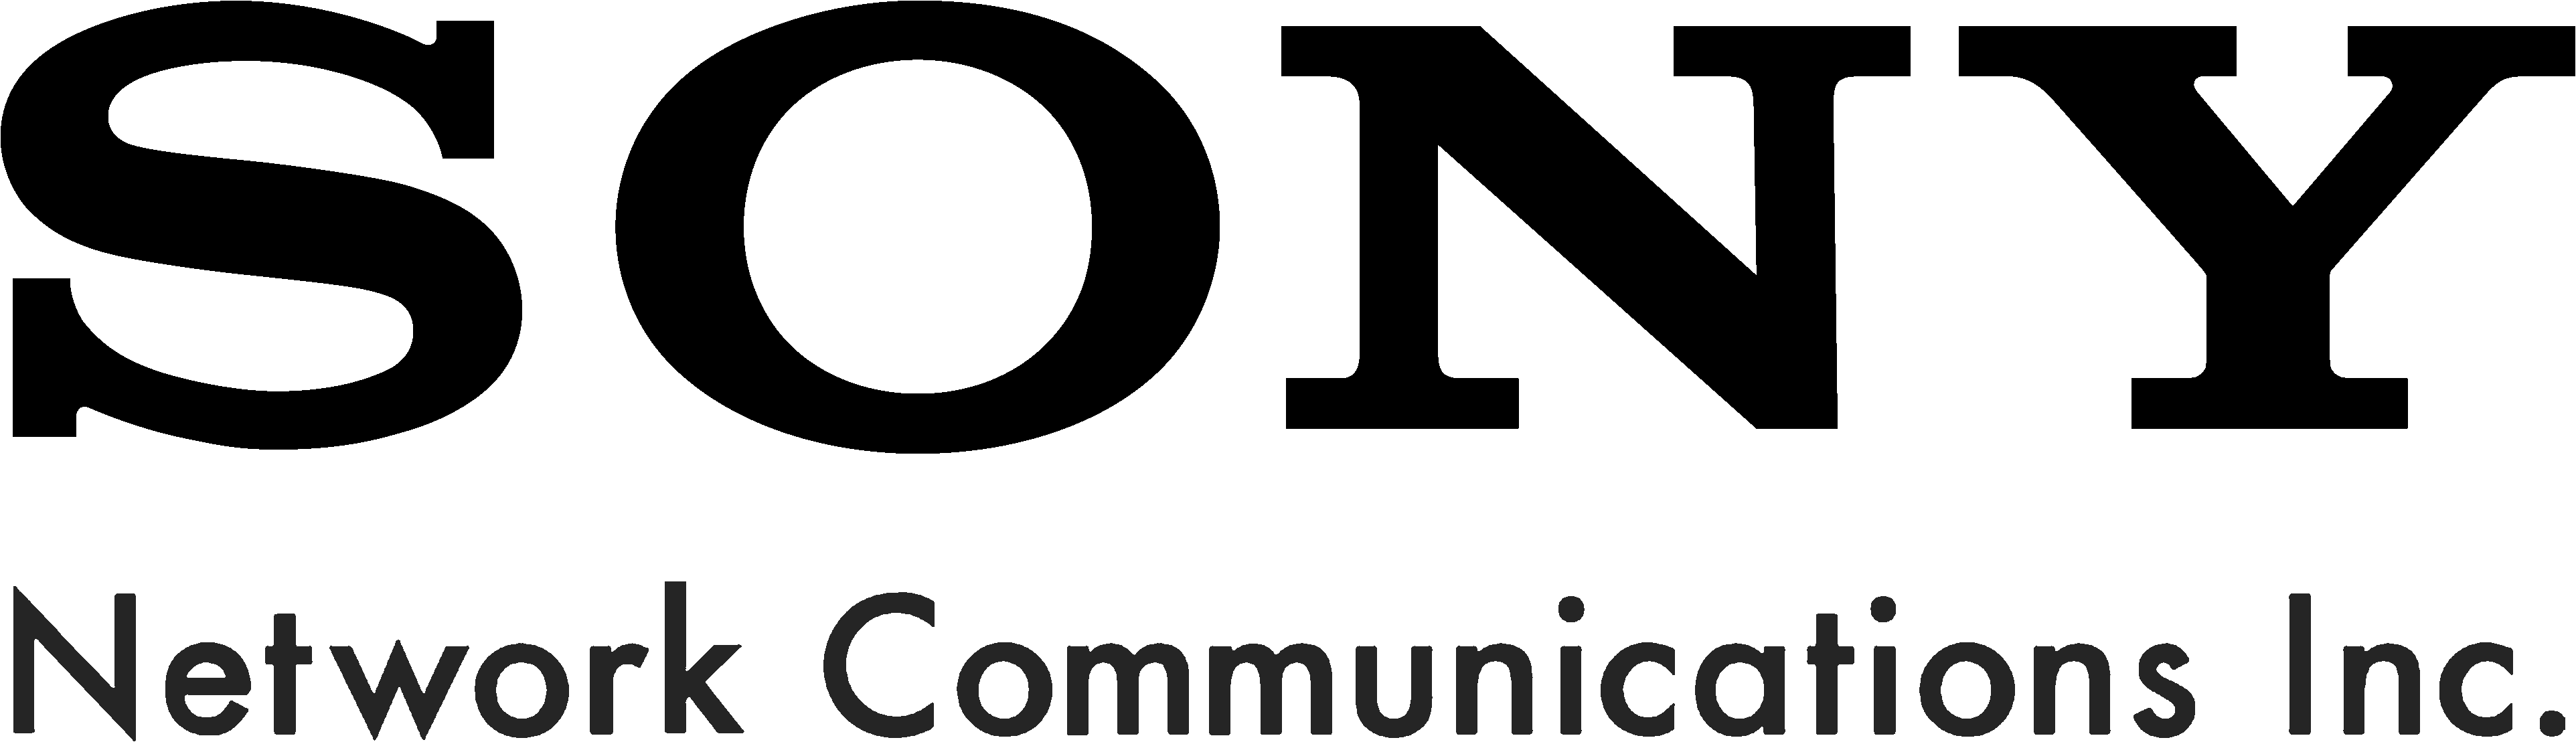 sony network communications